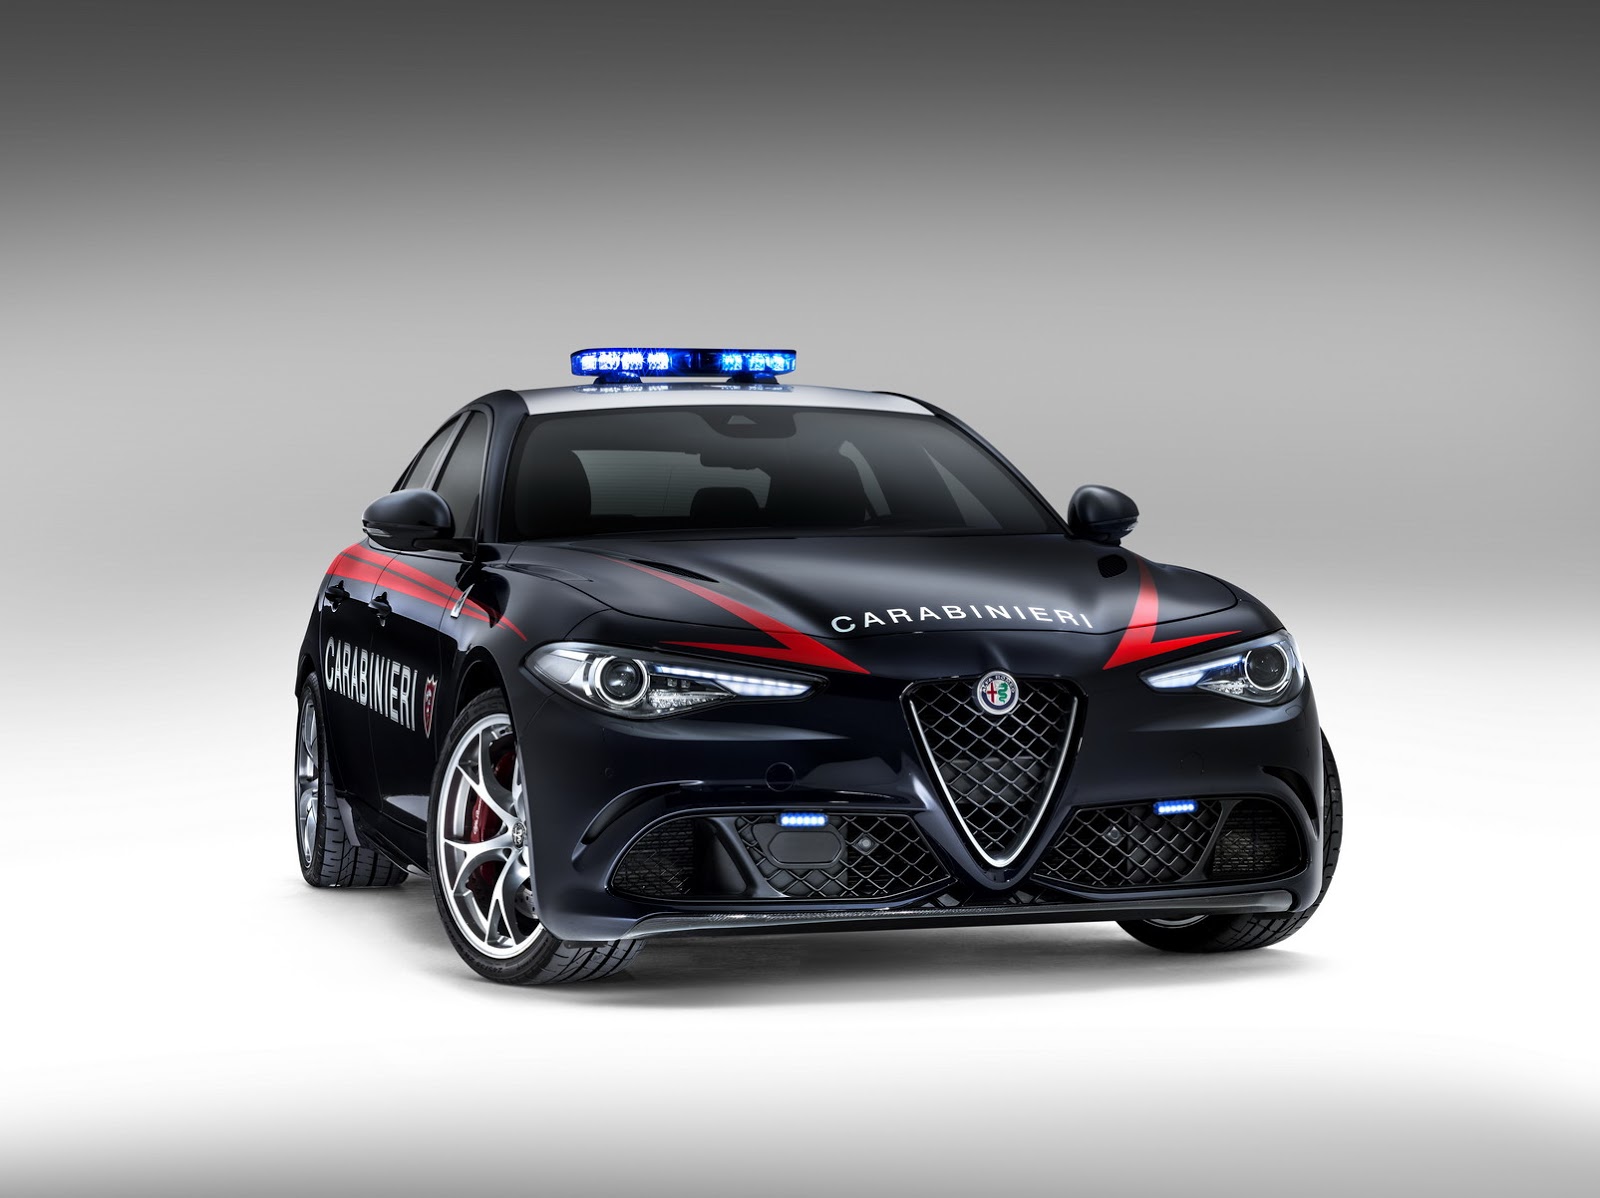 2016 Alfa Romeo Giulia Quadrifoglio Carabinieri